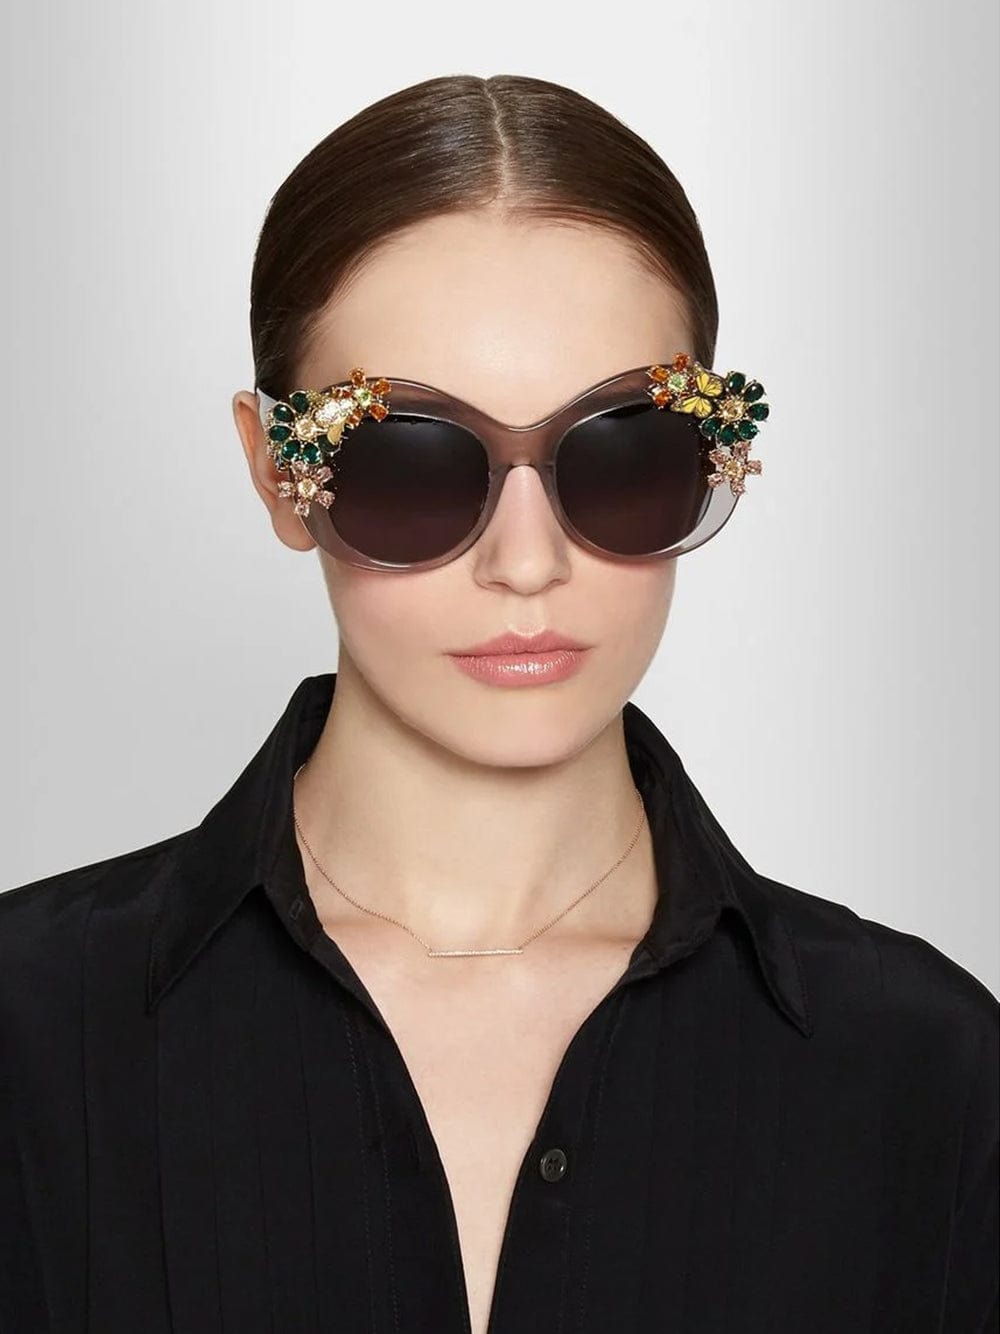 Dolce & Gabbana Swarovski Crystal-Embellished Sunglasses